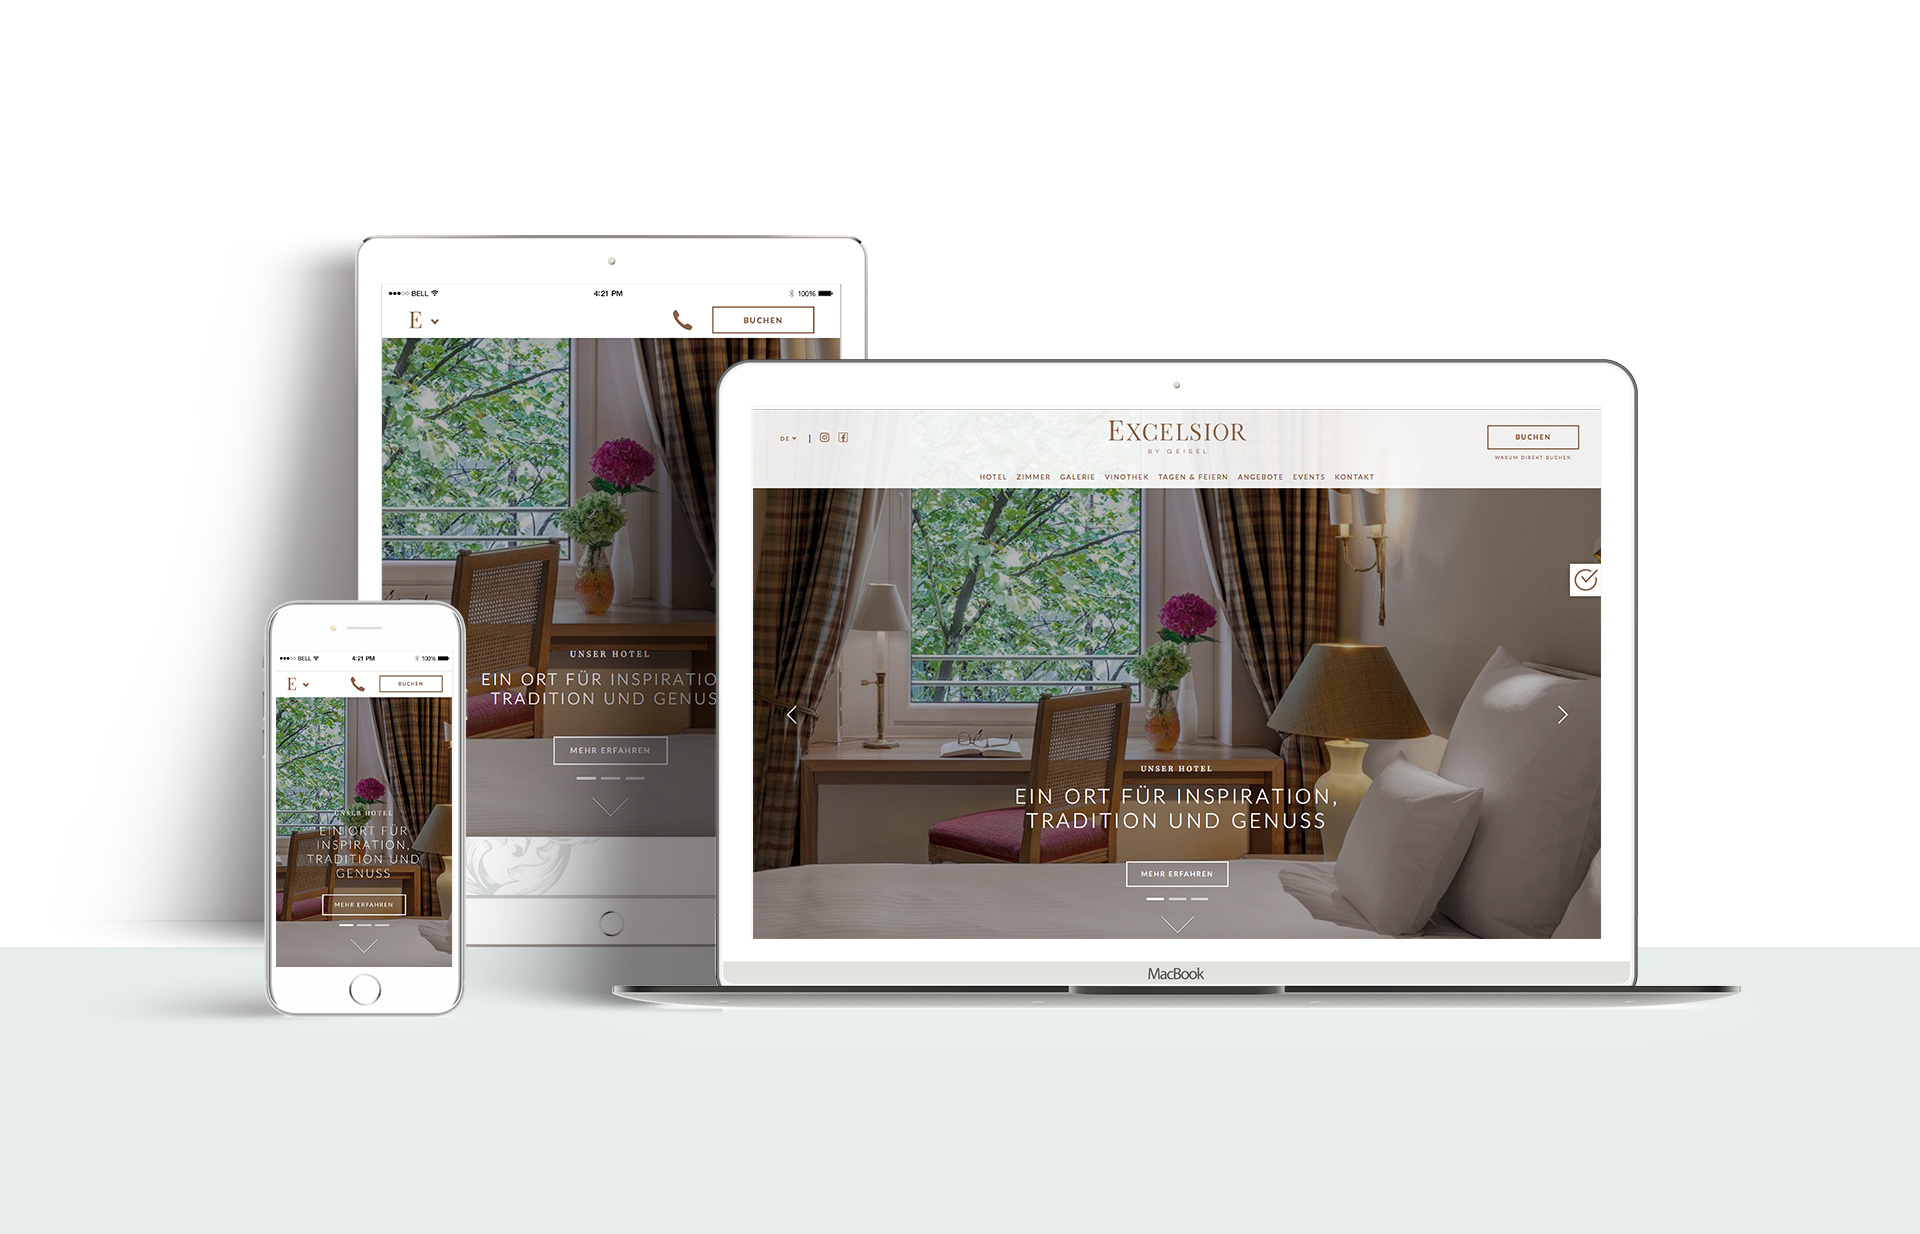 Sanmiguell excelsior hotel webdesign ux  01